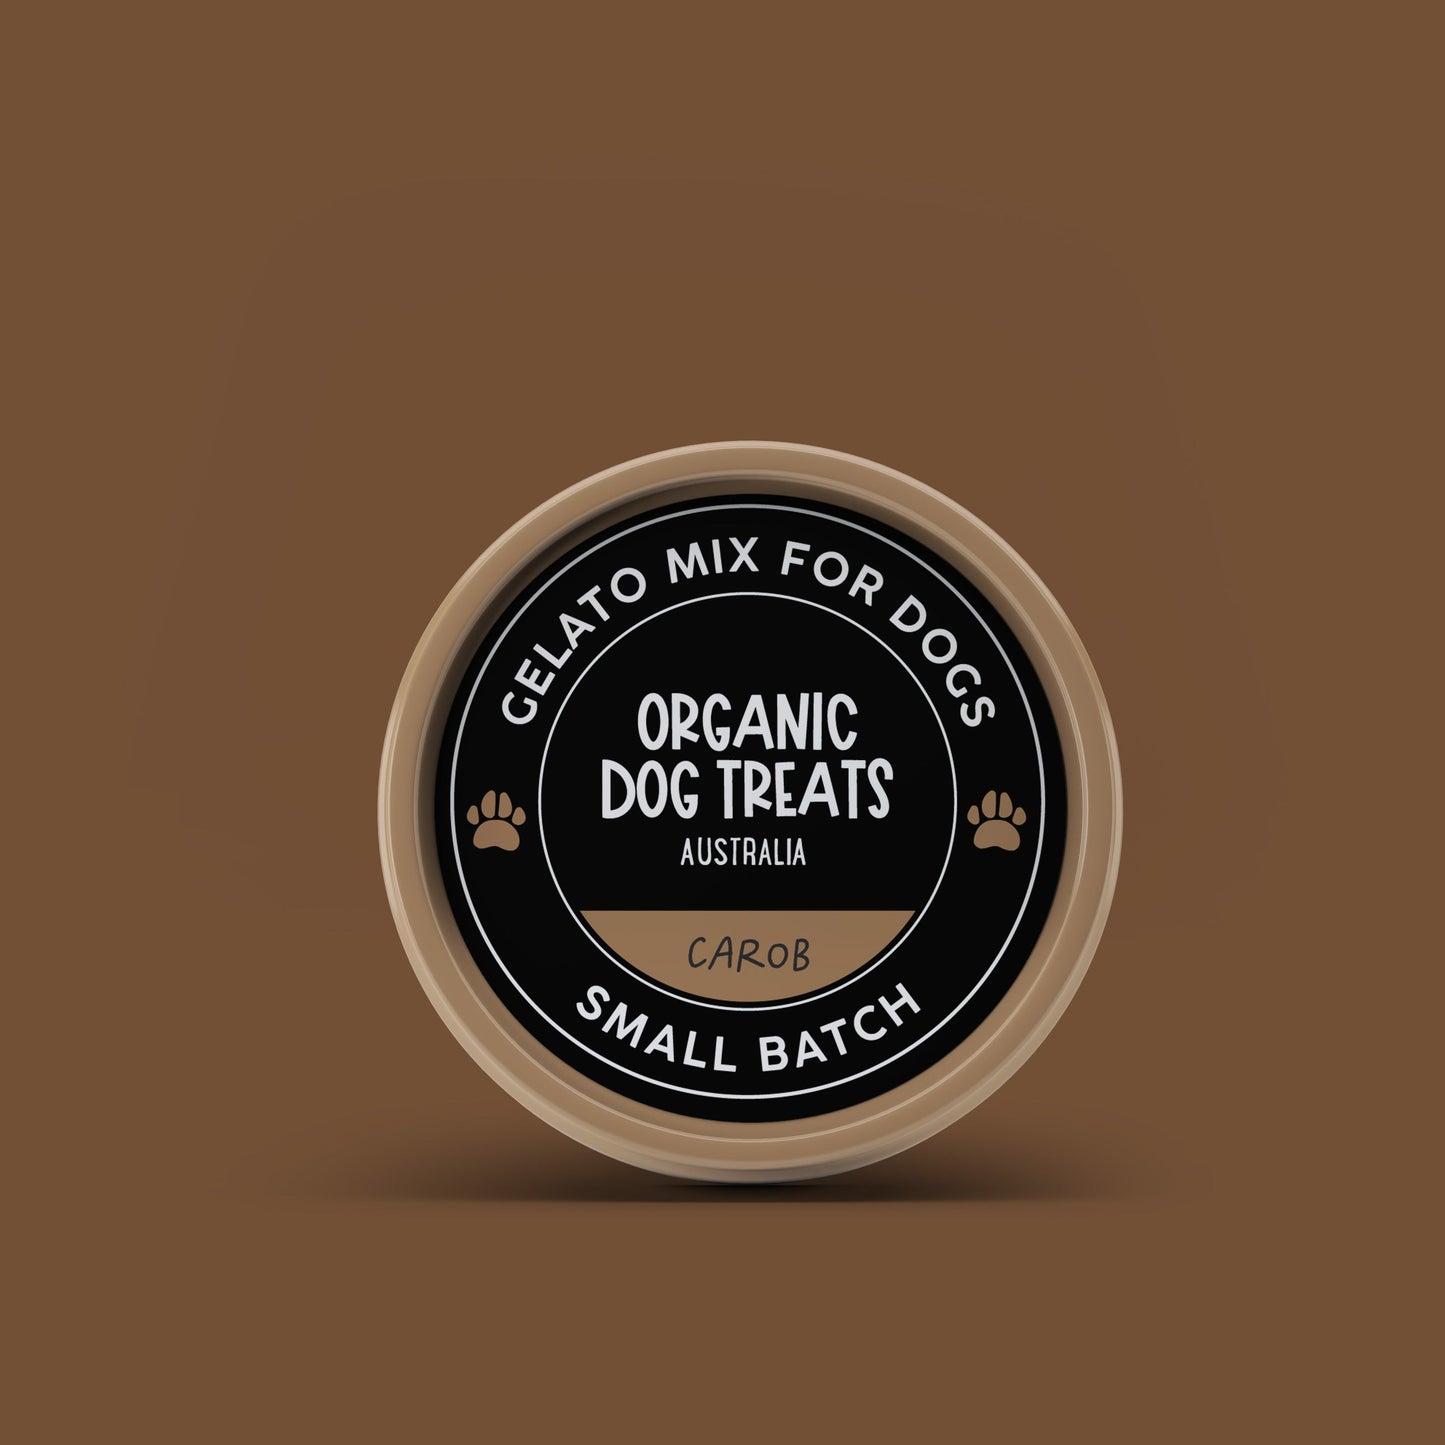 Organic Dog Gelato Value Pack  🍦🐶  Carob, Peanut Butter and Vanilla Ice Cream Flavours